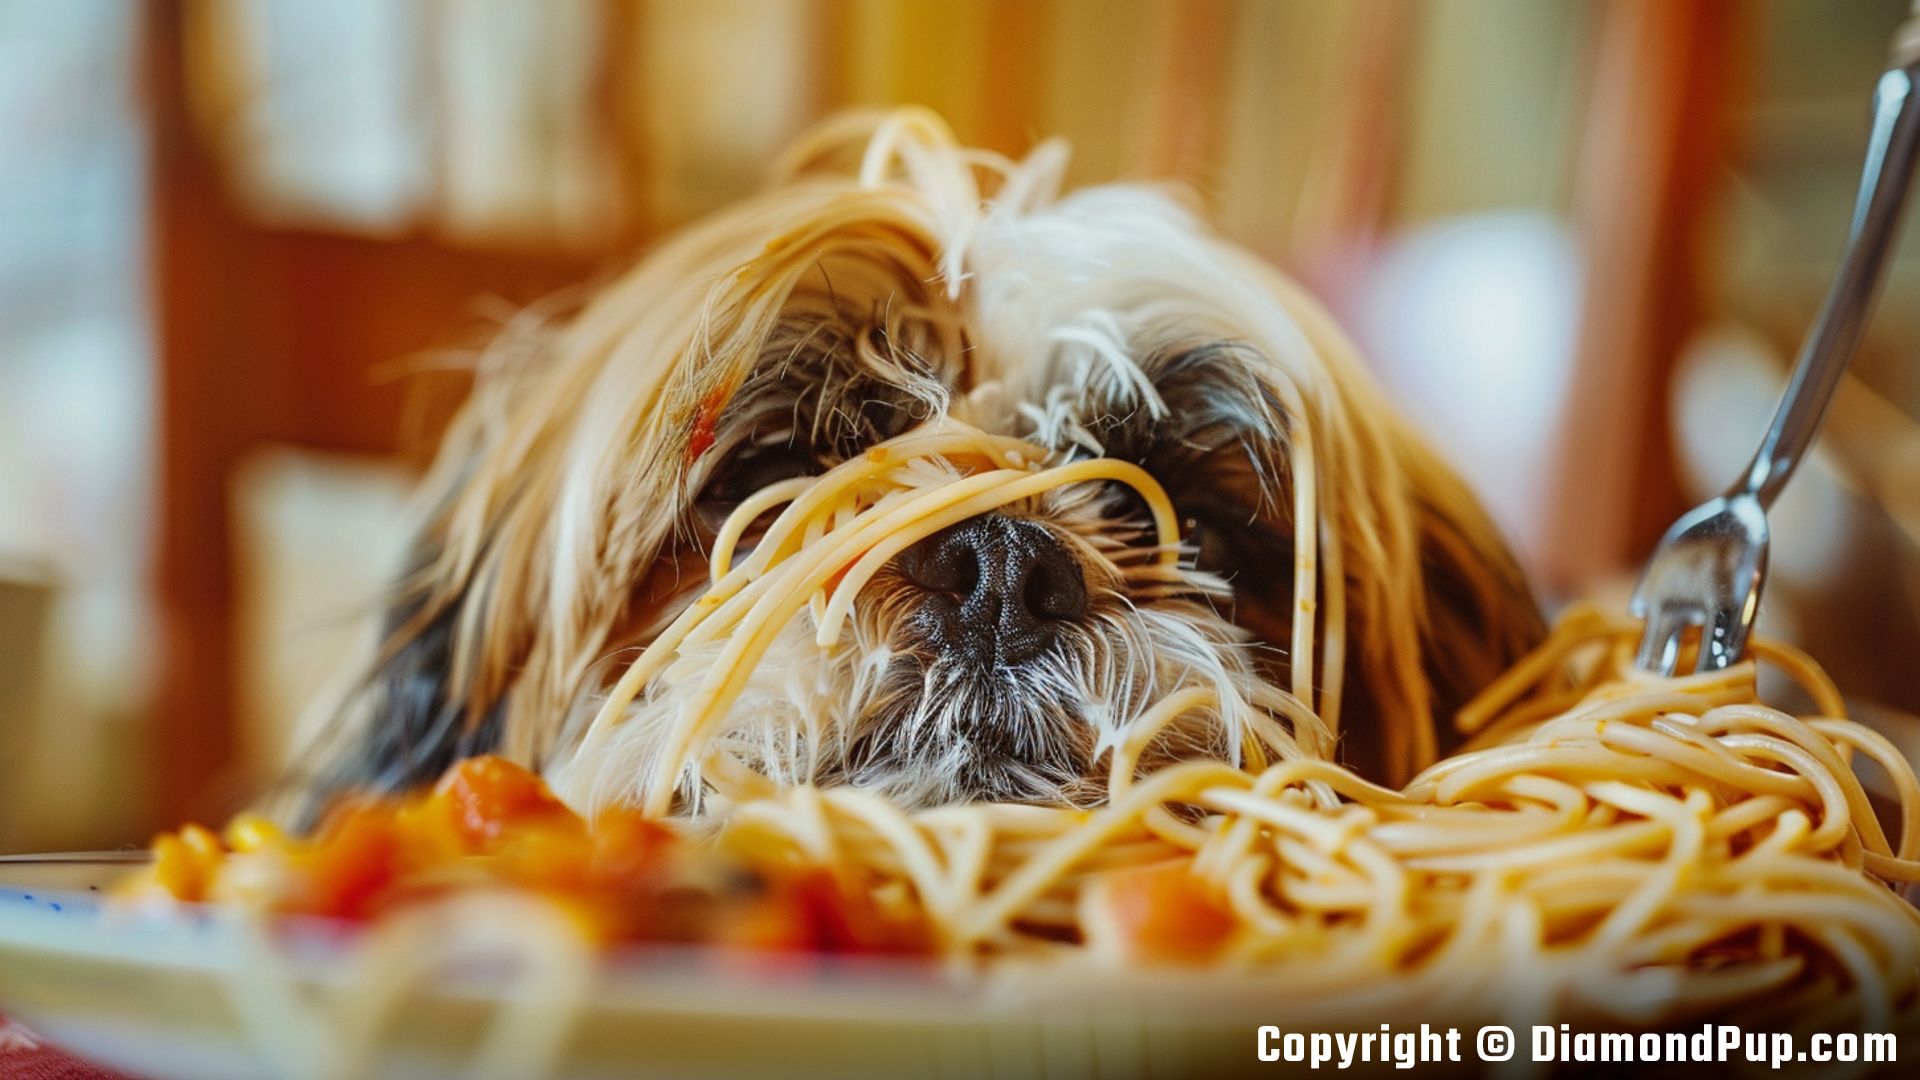 Photo of a Cute Shih Tzu Eating Pasta